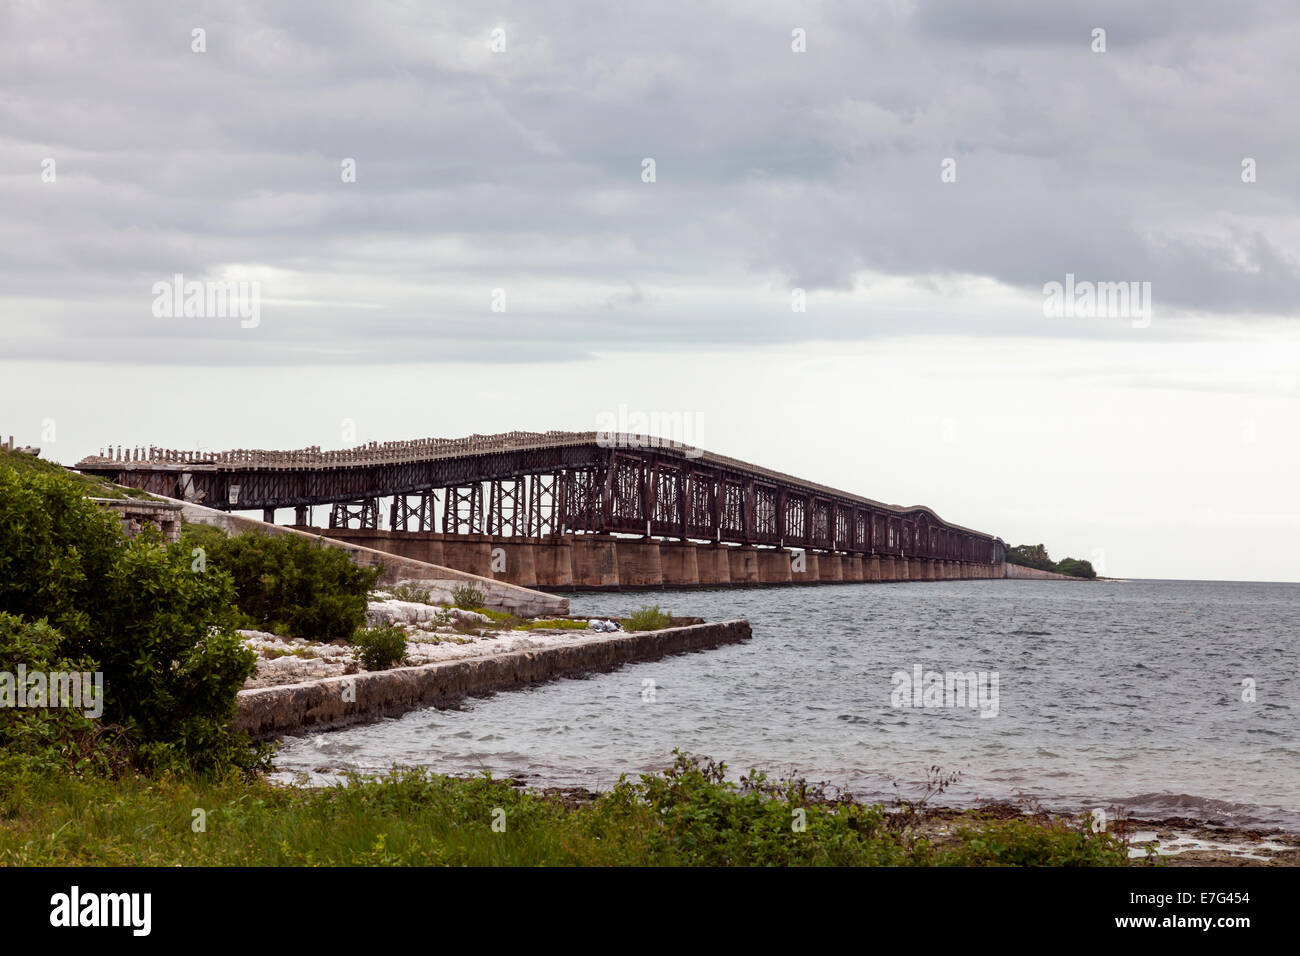 Old, abandoned Bahia Honda rail bridge (c.1912) viewed from Spanish Harbor Key in the Florida Keys, USA. Stock Photo